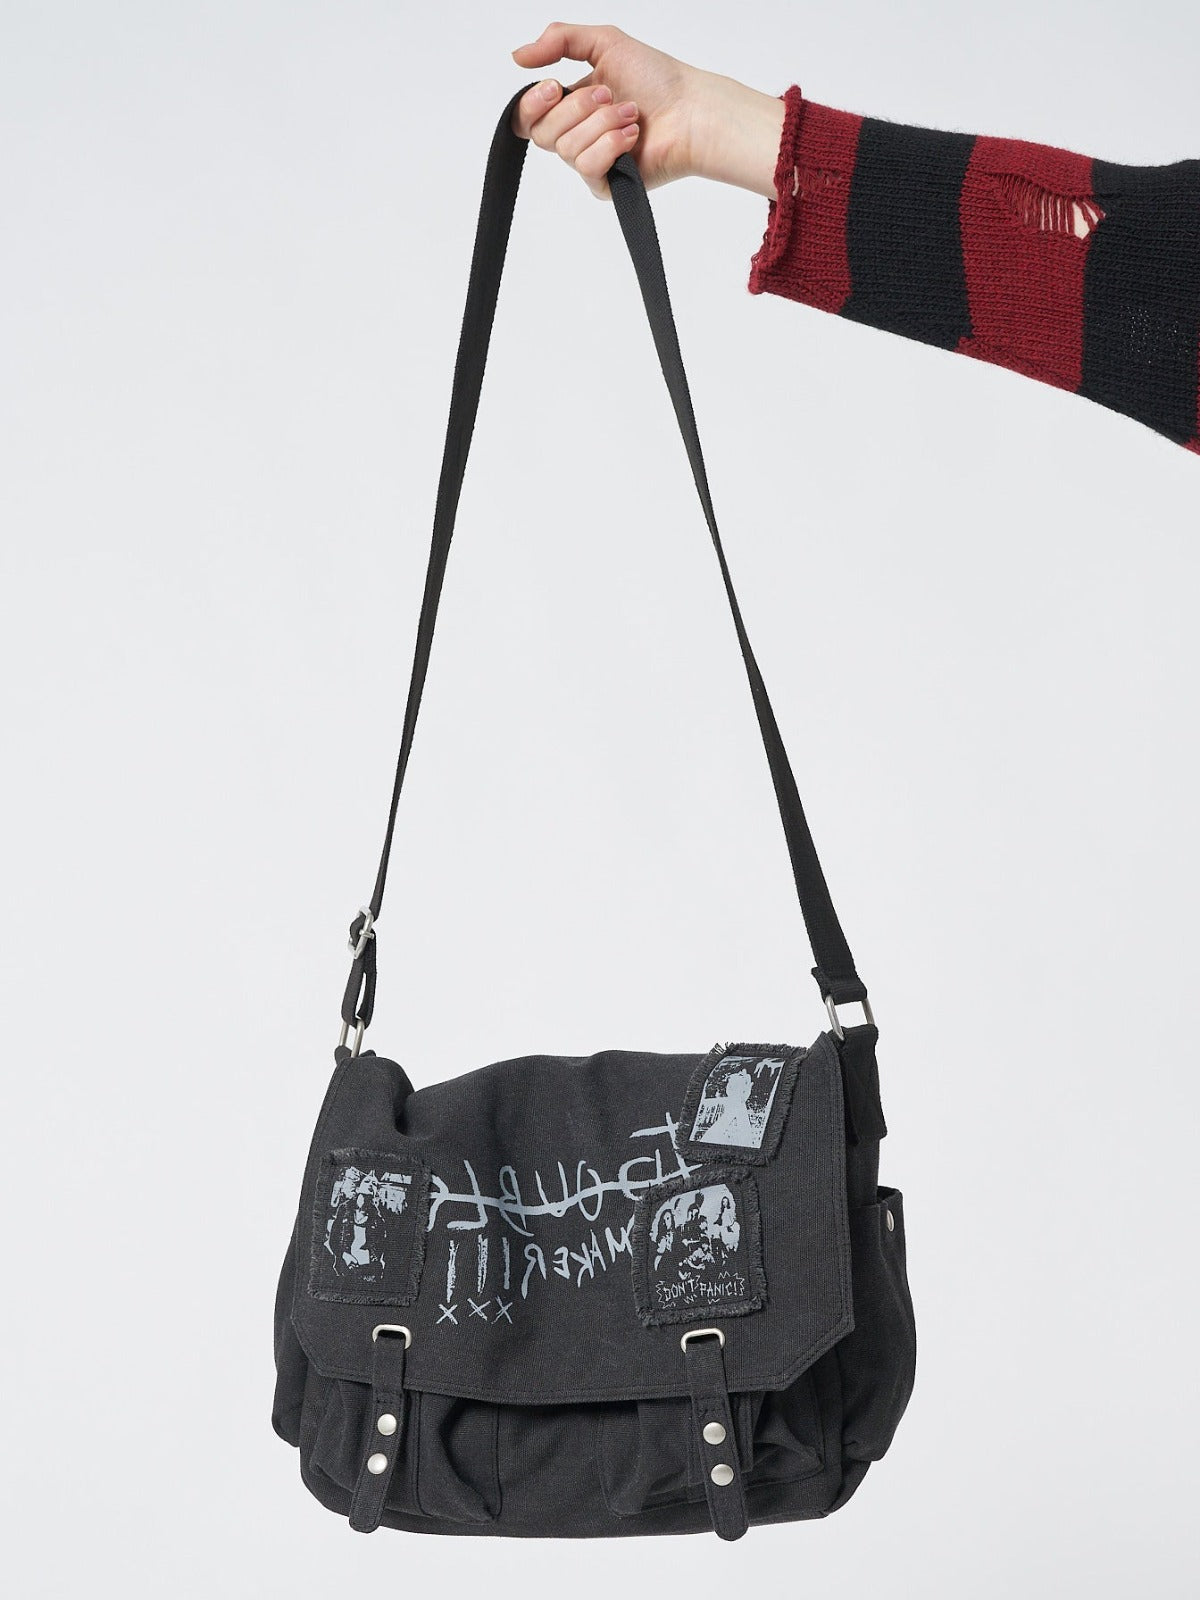 Troublemaker Black Canvas Messenger Bag - Minga London